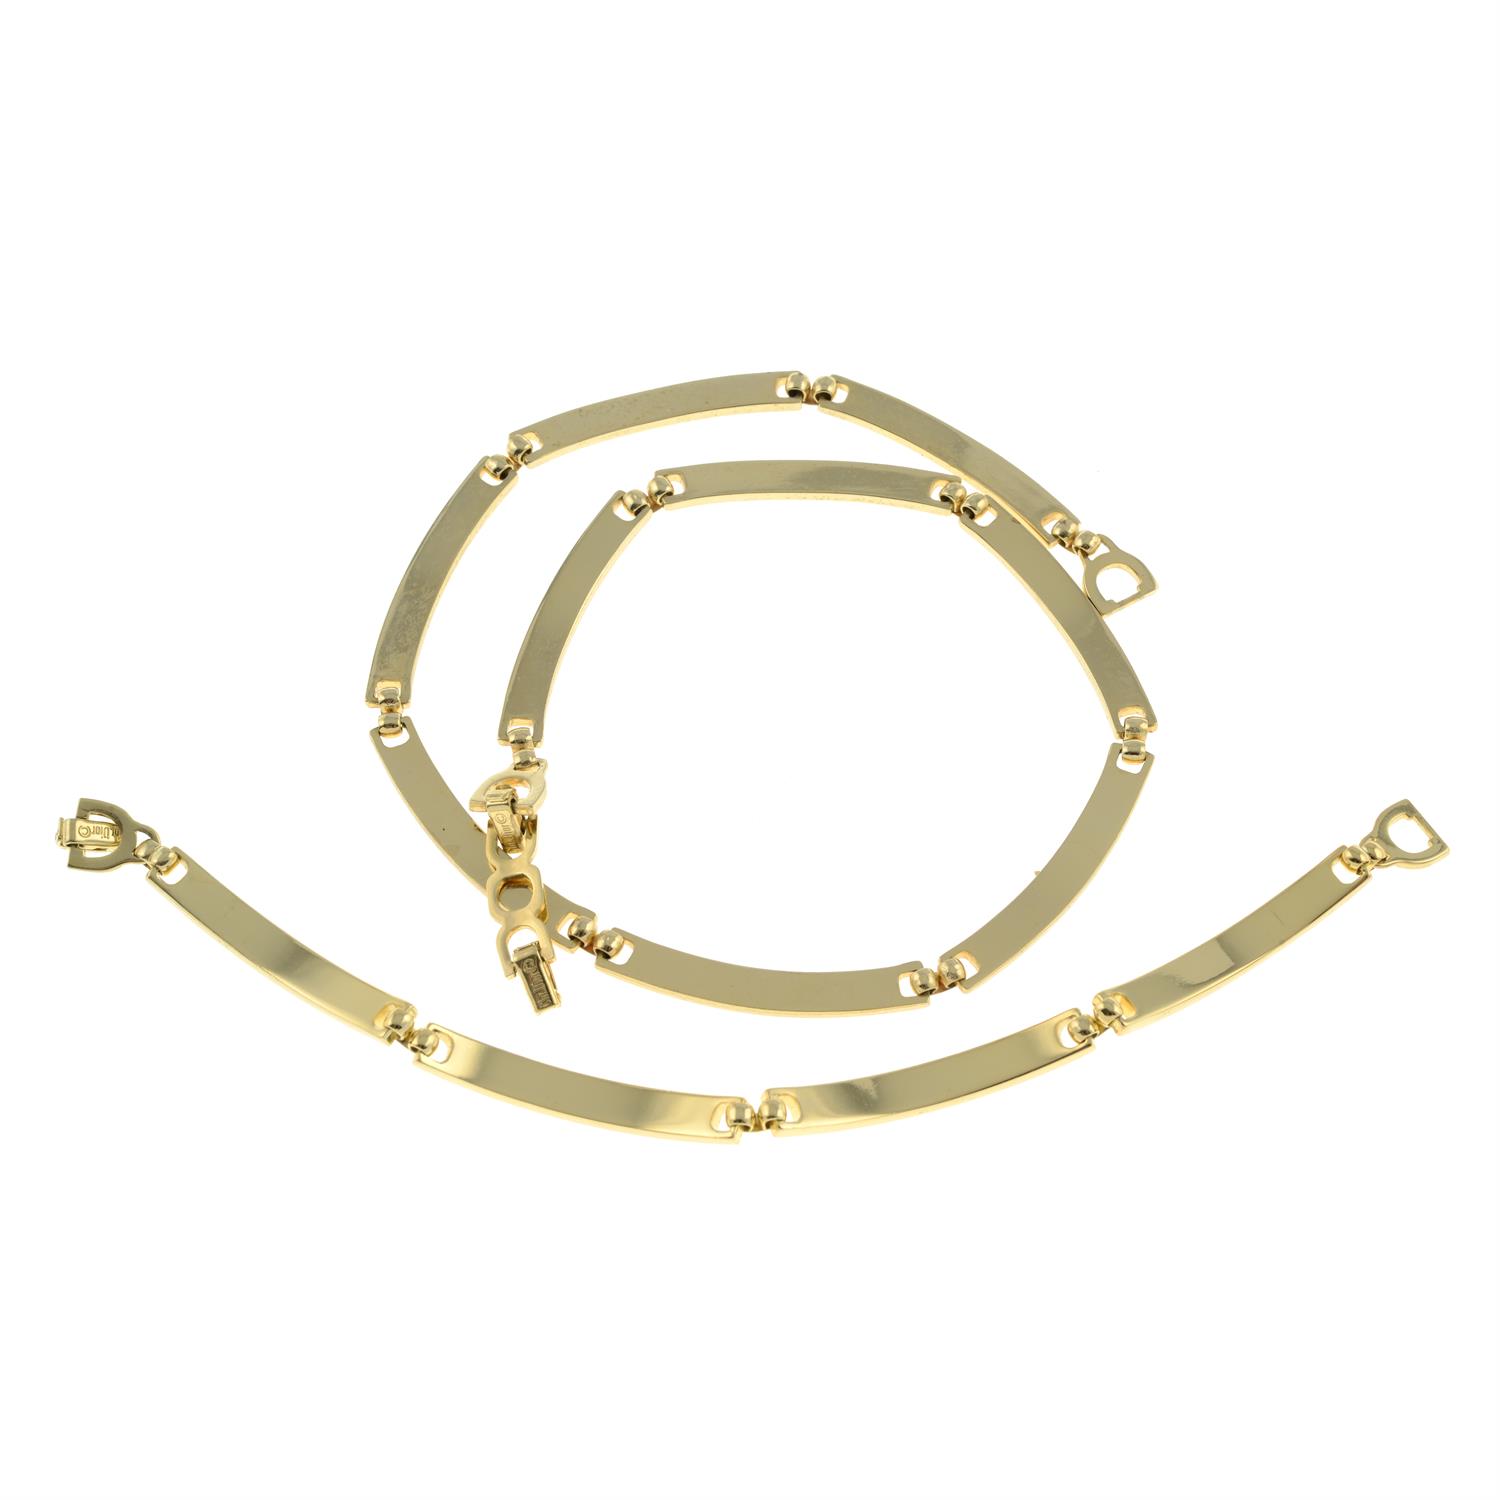 Christian Dior - necklace and bracelet set. - Image 2 of 2